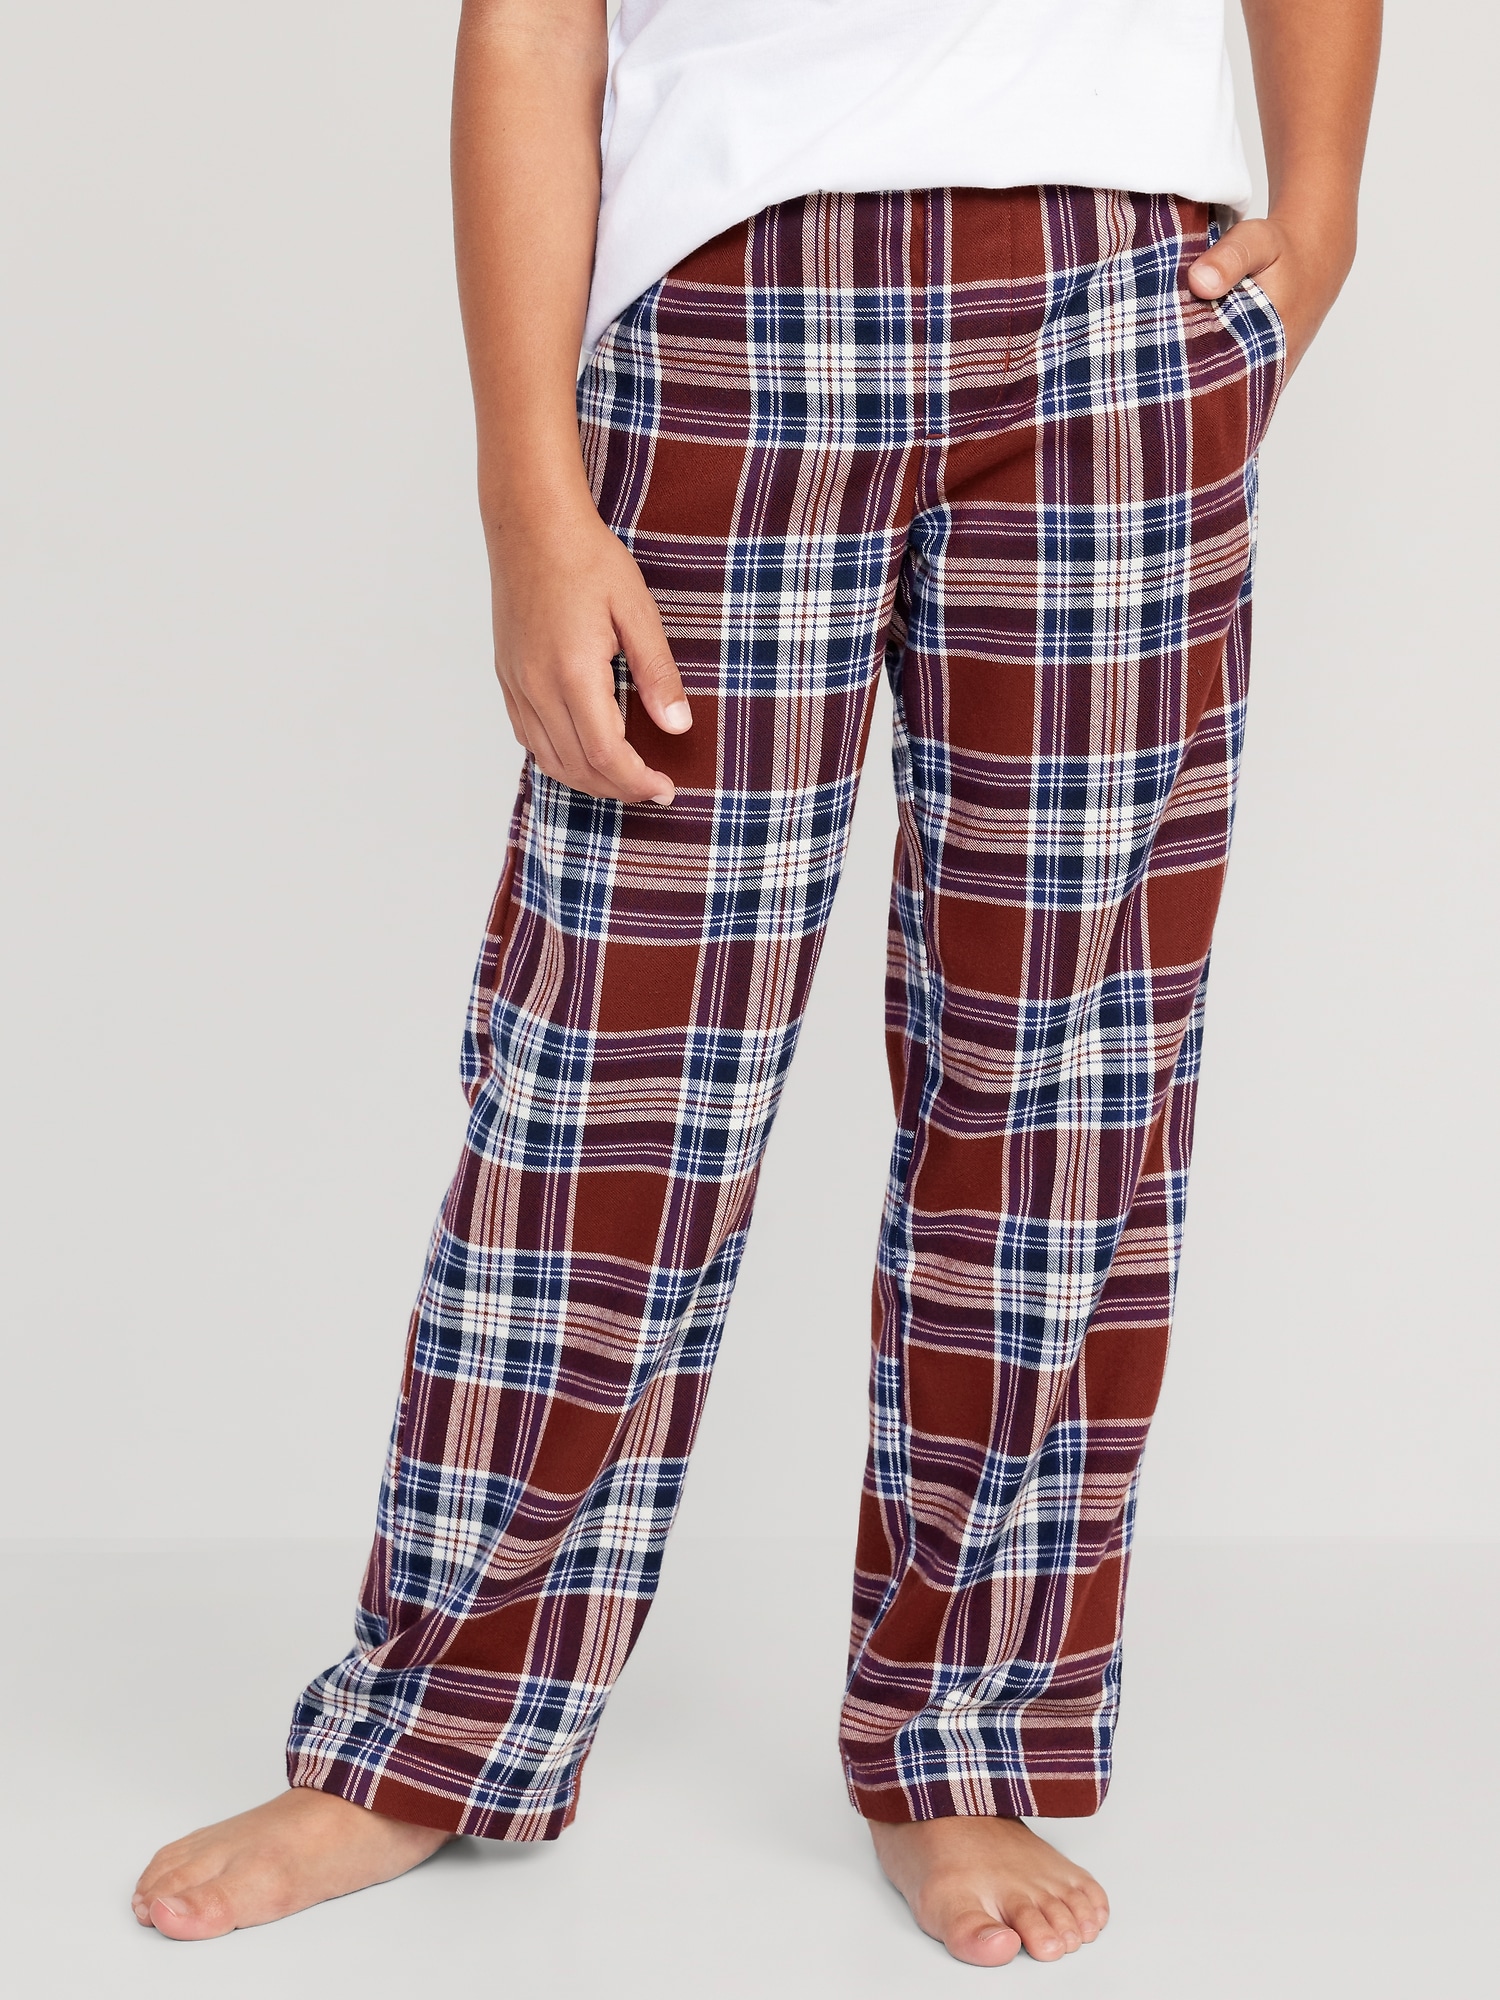 Calvin Klein Plaid Pajama Pants Size XS 5/6 fleece Boys Black Red Gray